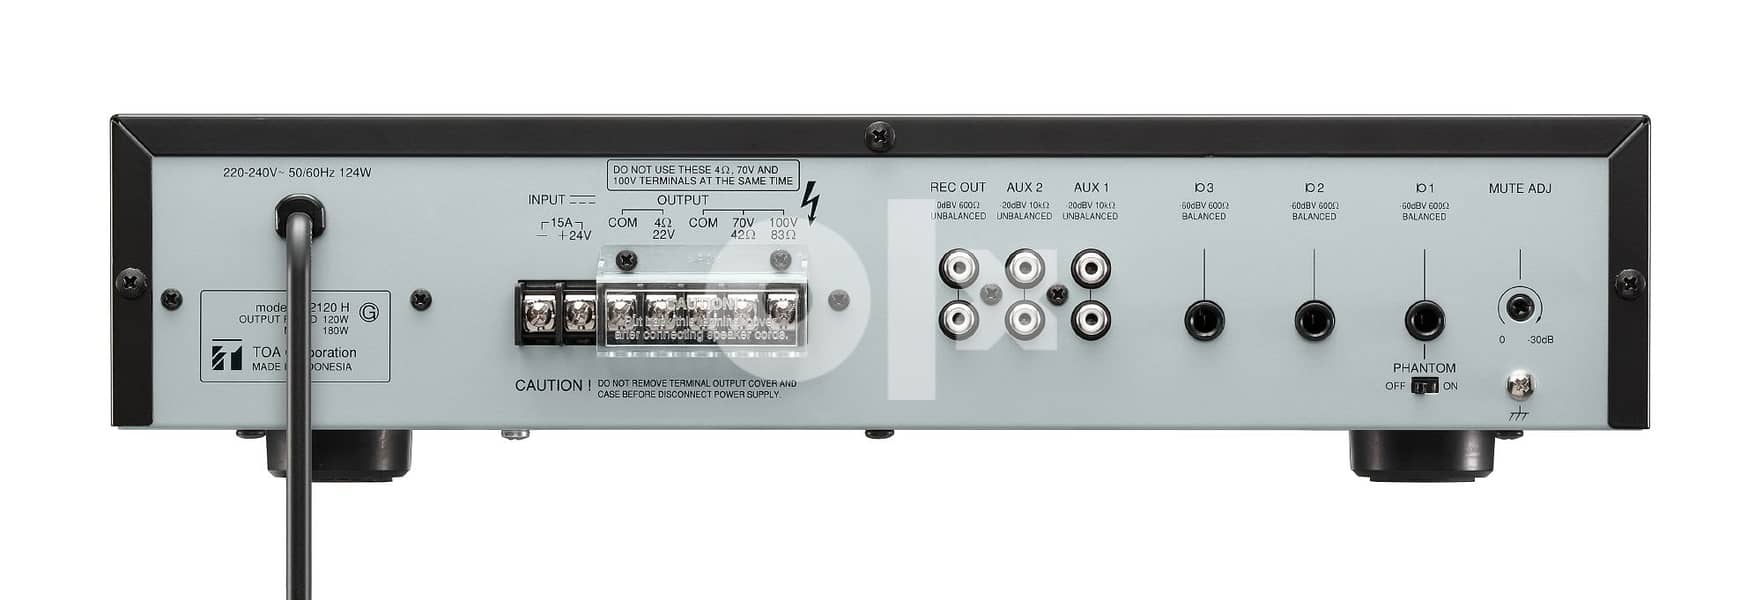 TOA Mixer Amplifier  A-2120 H For Sale 3